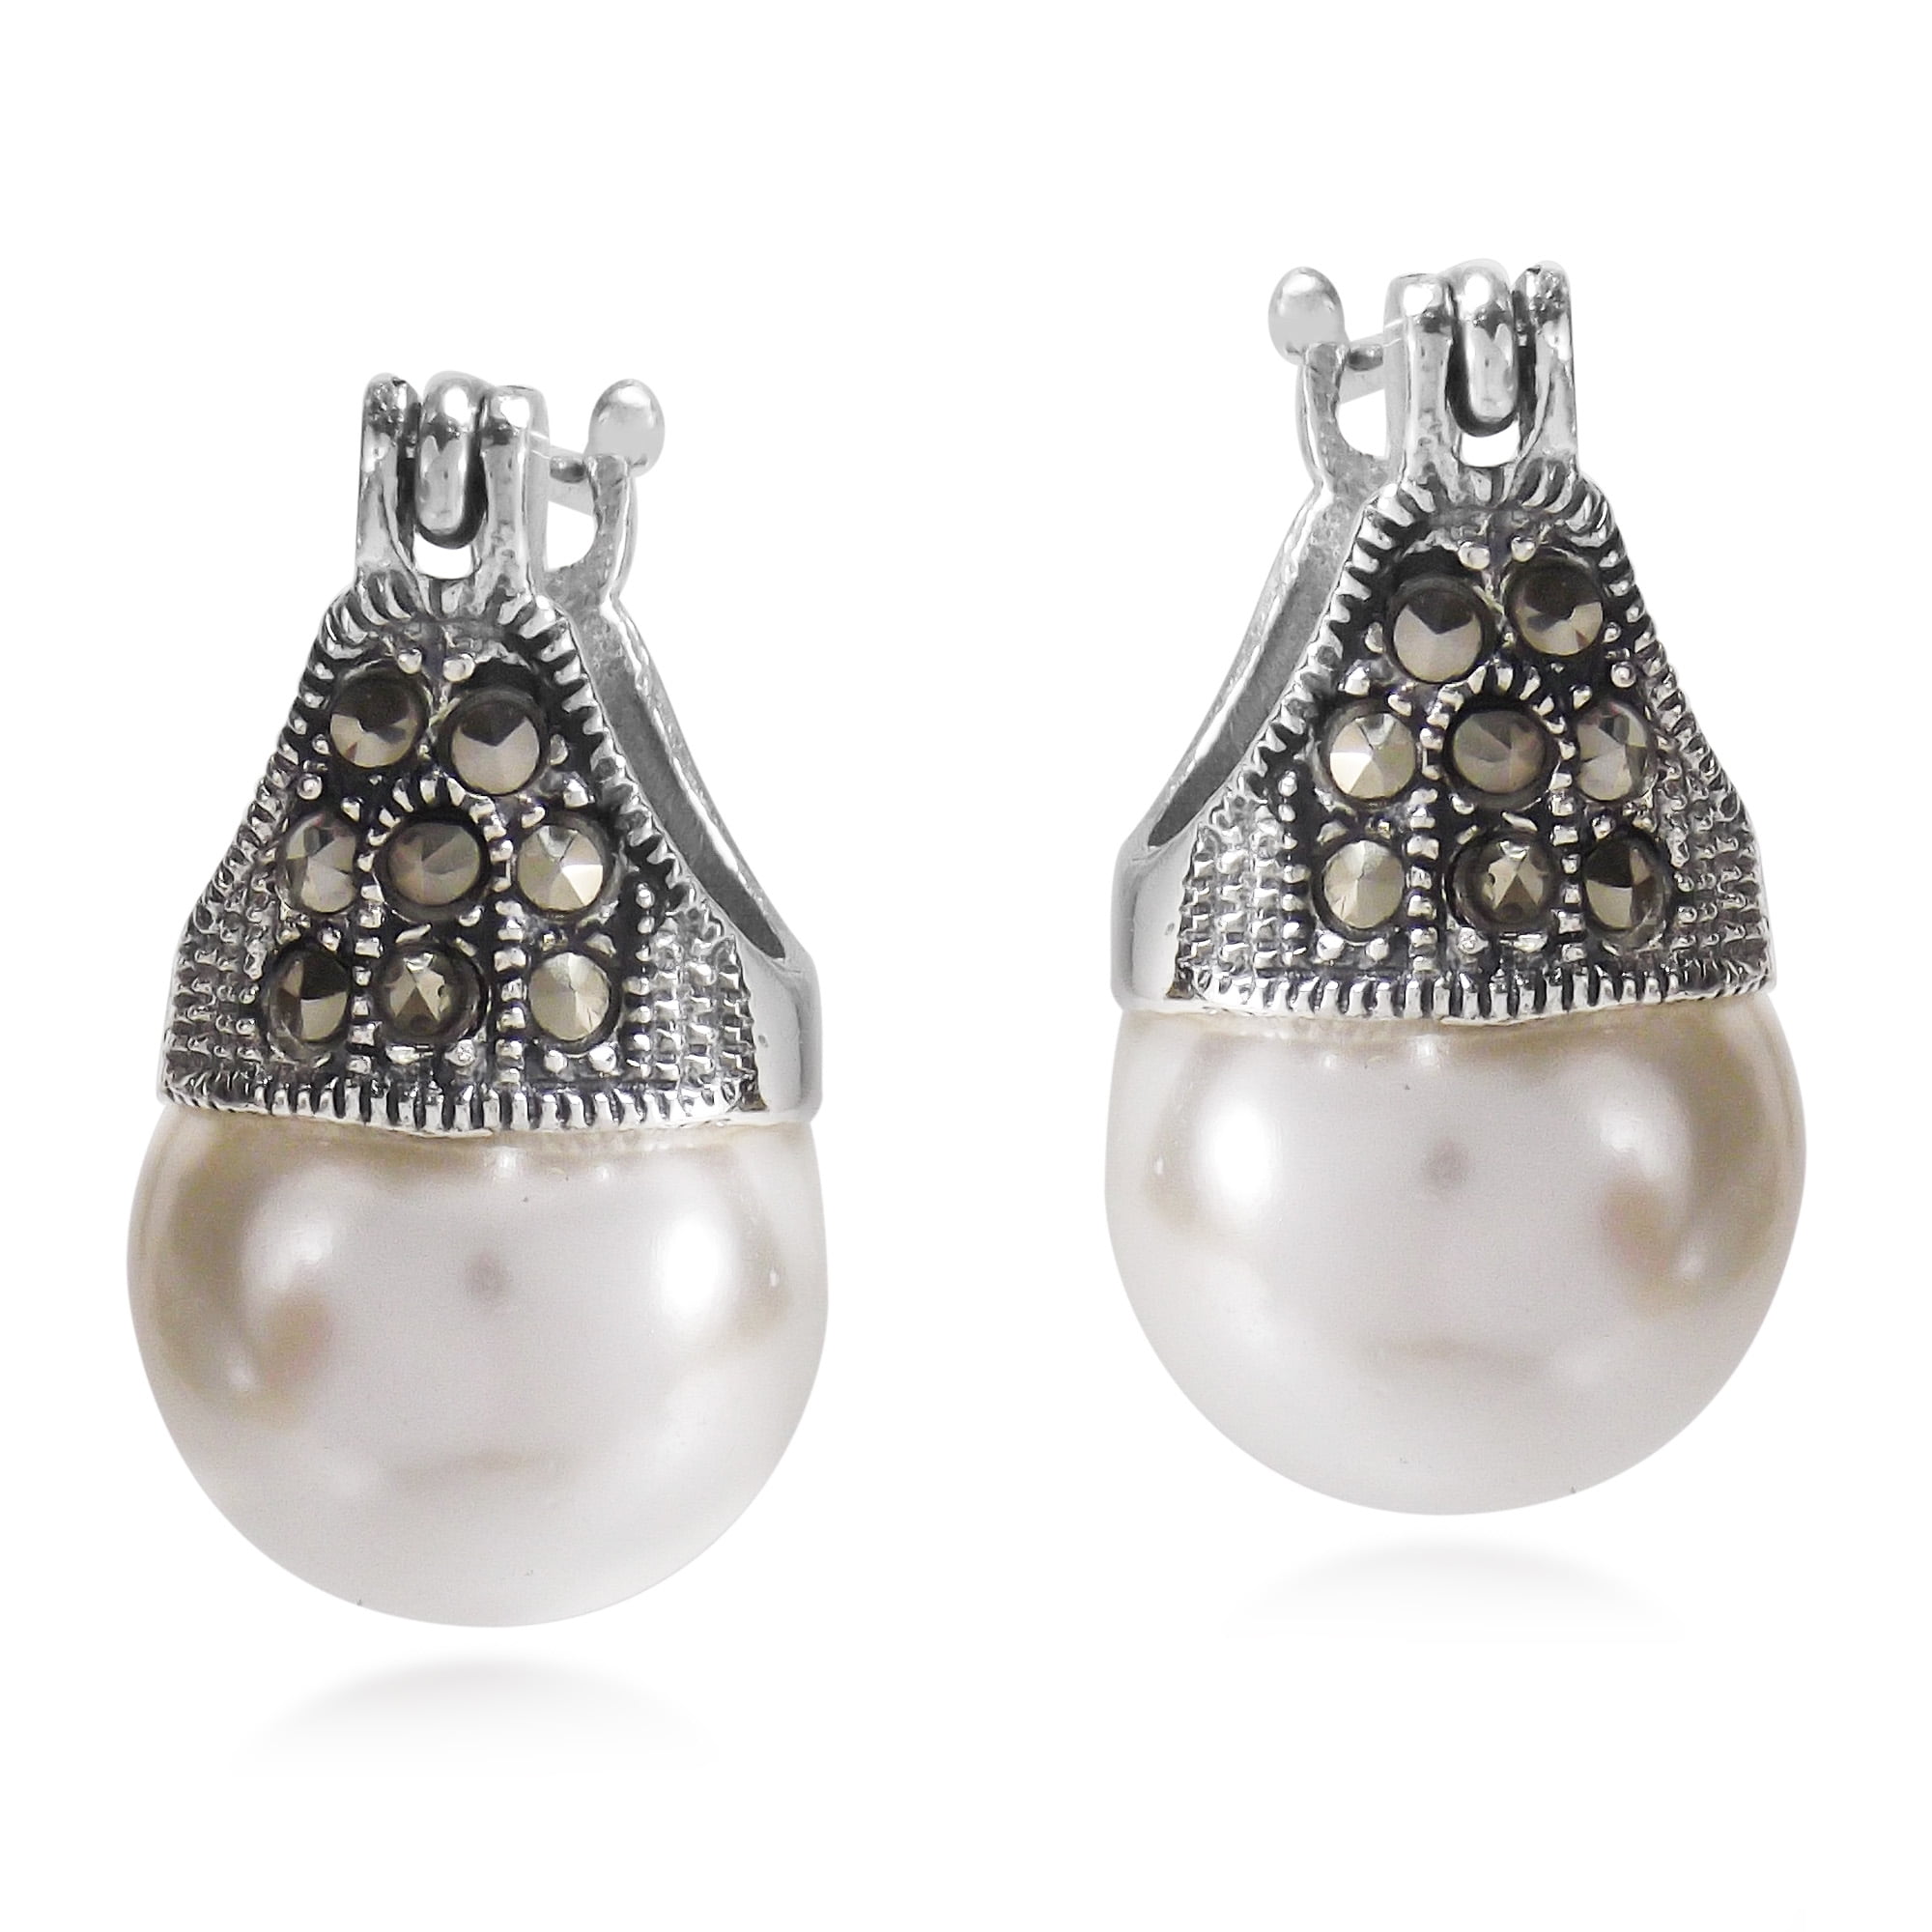 Stamped Thai Silver Earrings Ethnic Earrings Gypsy Earrings Boho earrings Boho Chic Earrings Sterling Silver Earrings